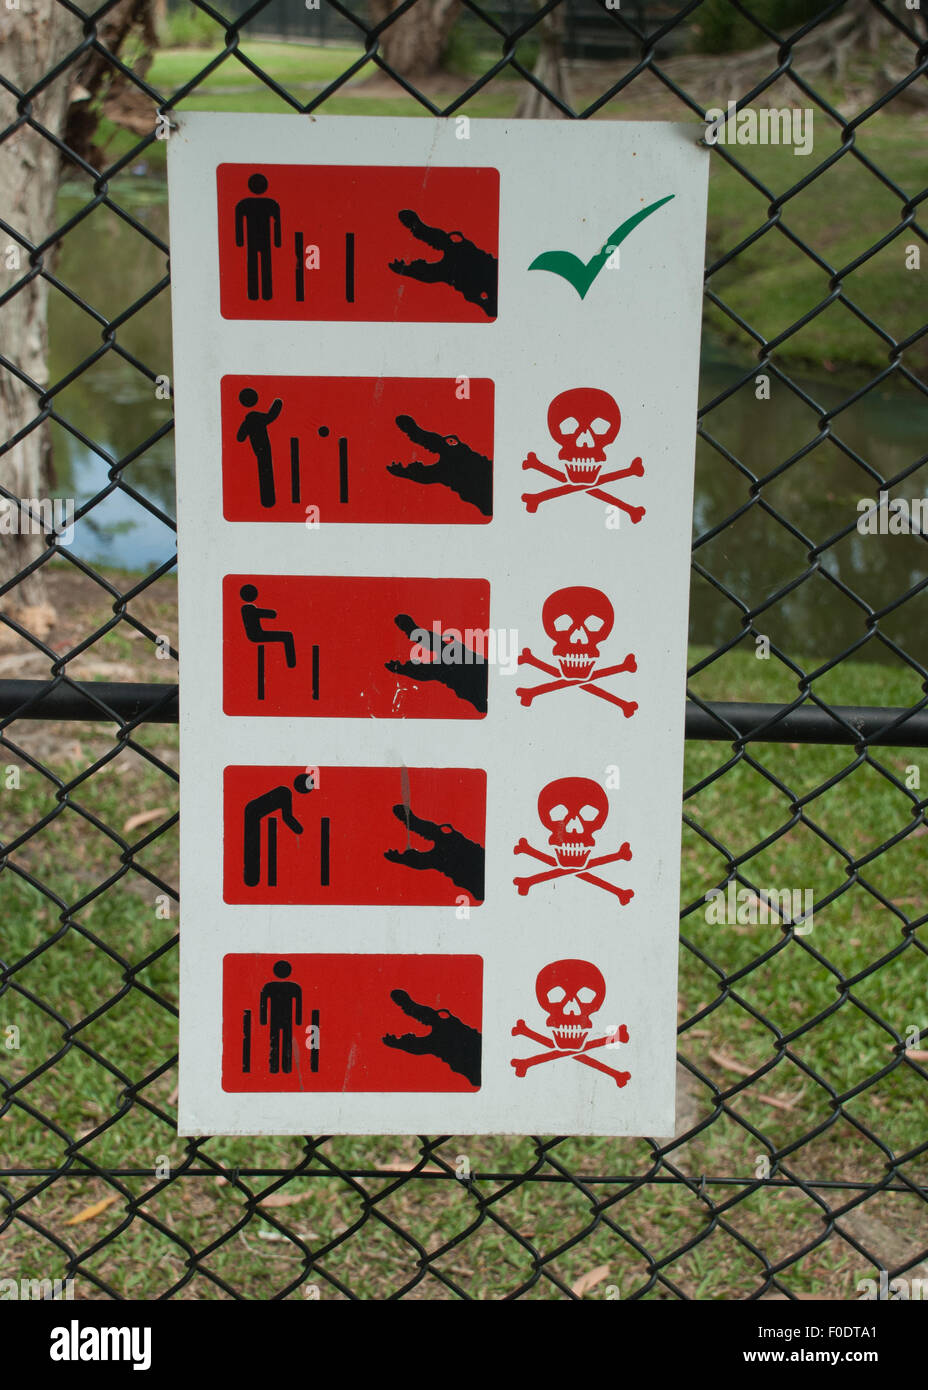 Crocodile warning safety sign Stock Photo